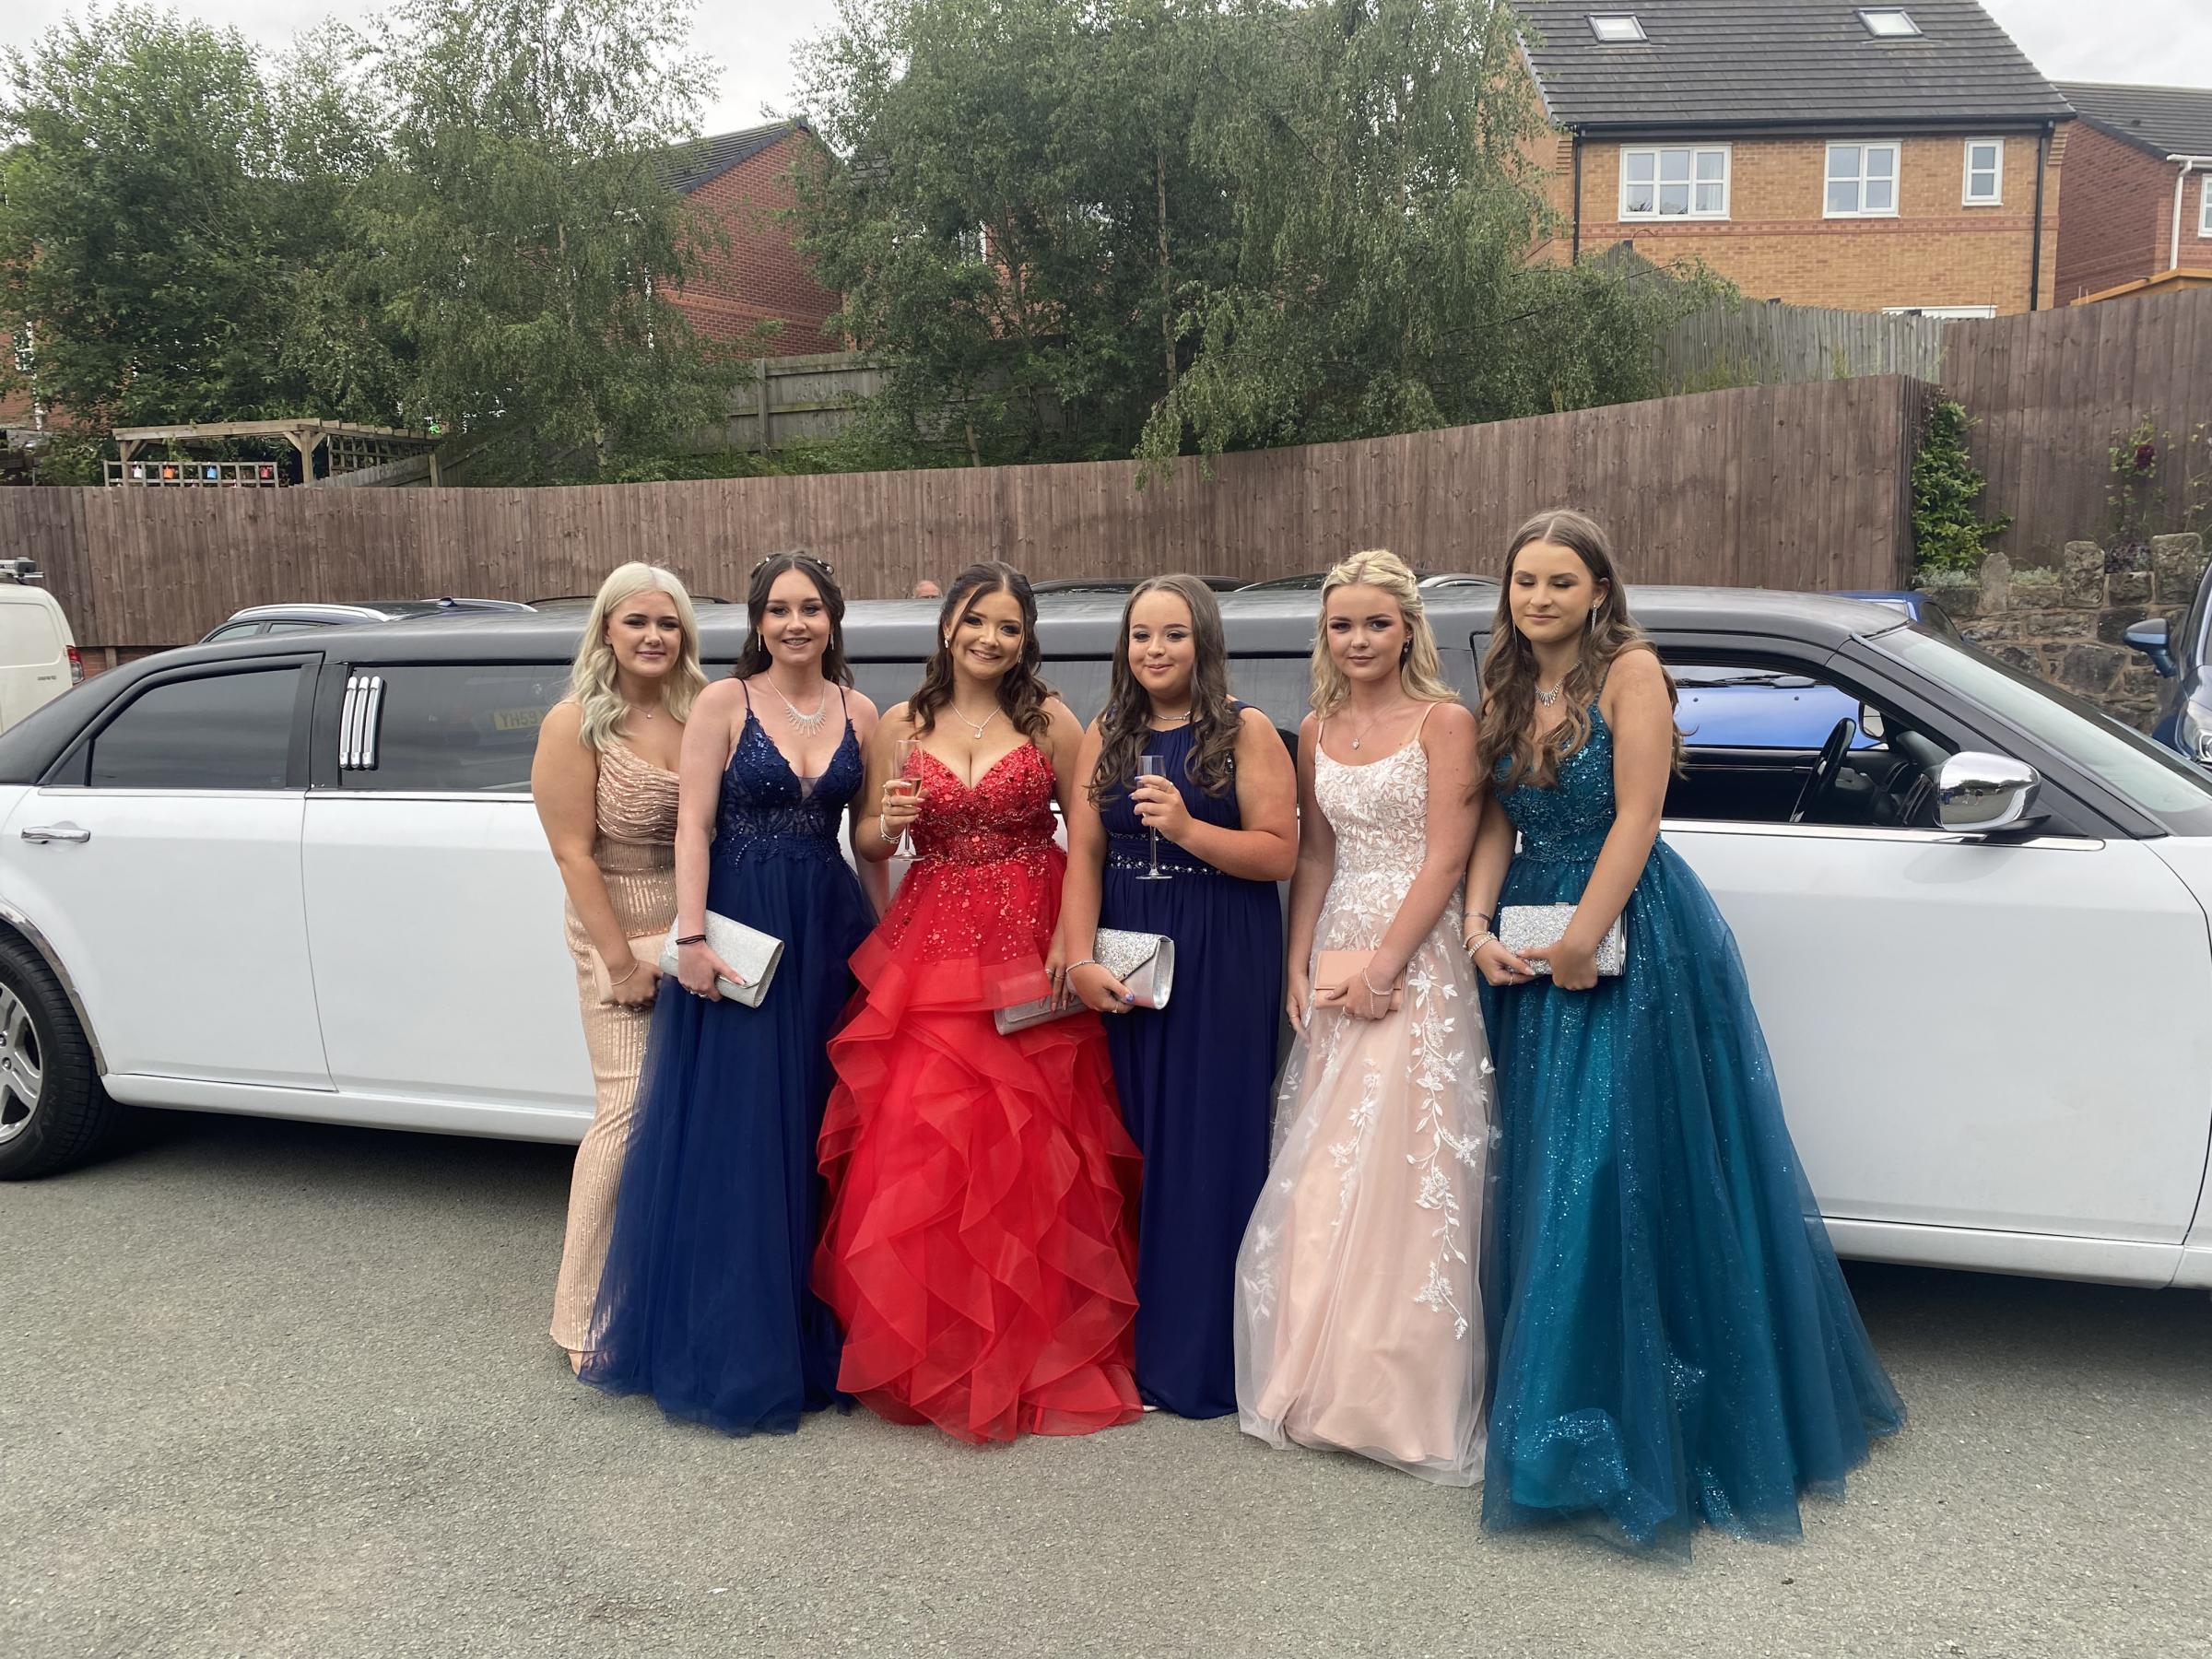 Ysgol Bryn Alyn Year 11 friends Lily Williams, Frena Brimfield, Carys Evans-Lea, Ellie Wright, Elyse Jones and Kaitlin Scragg, getting picked up in style for prom.